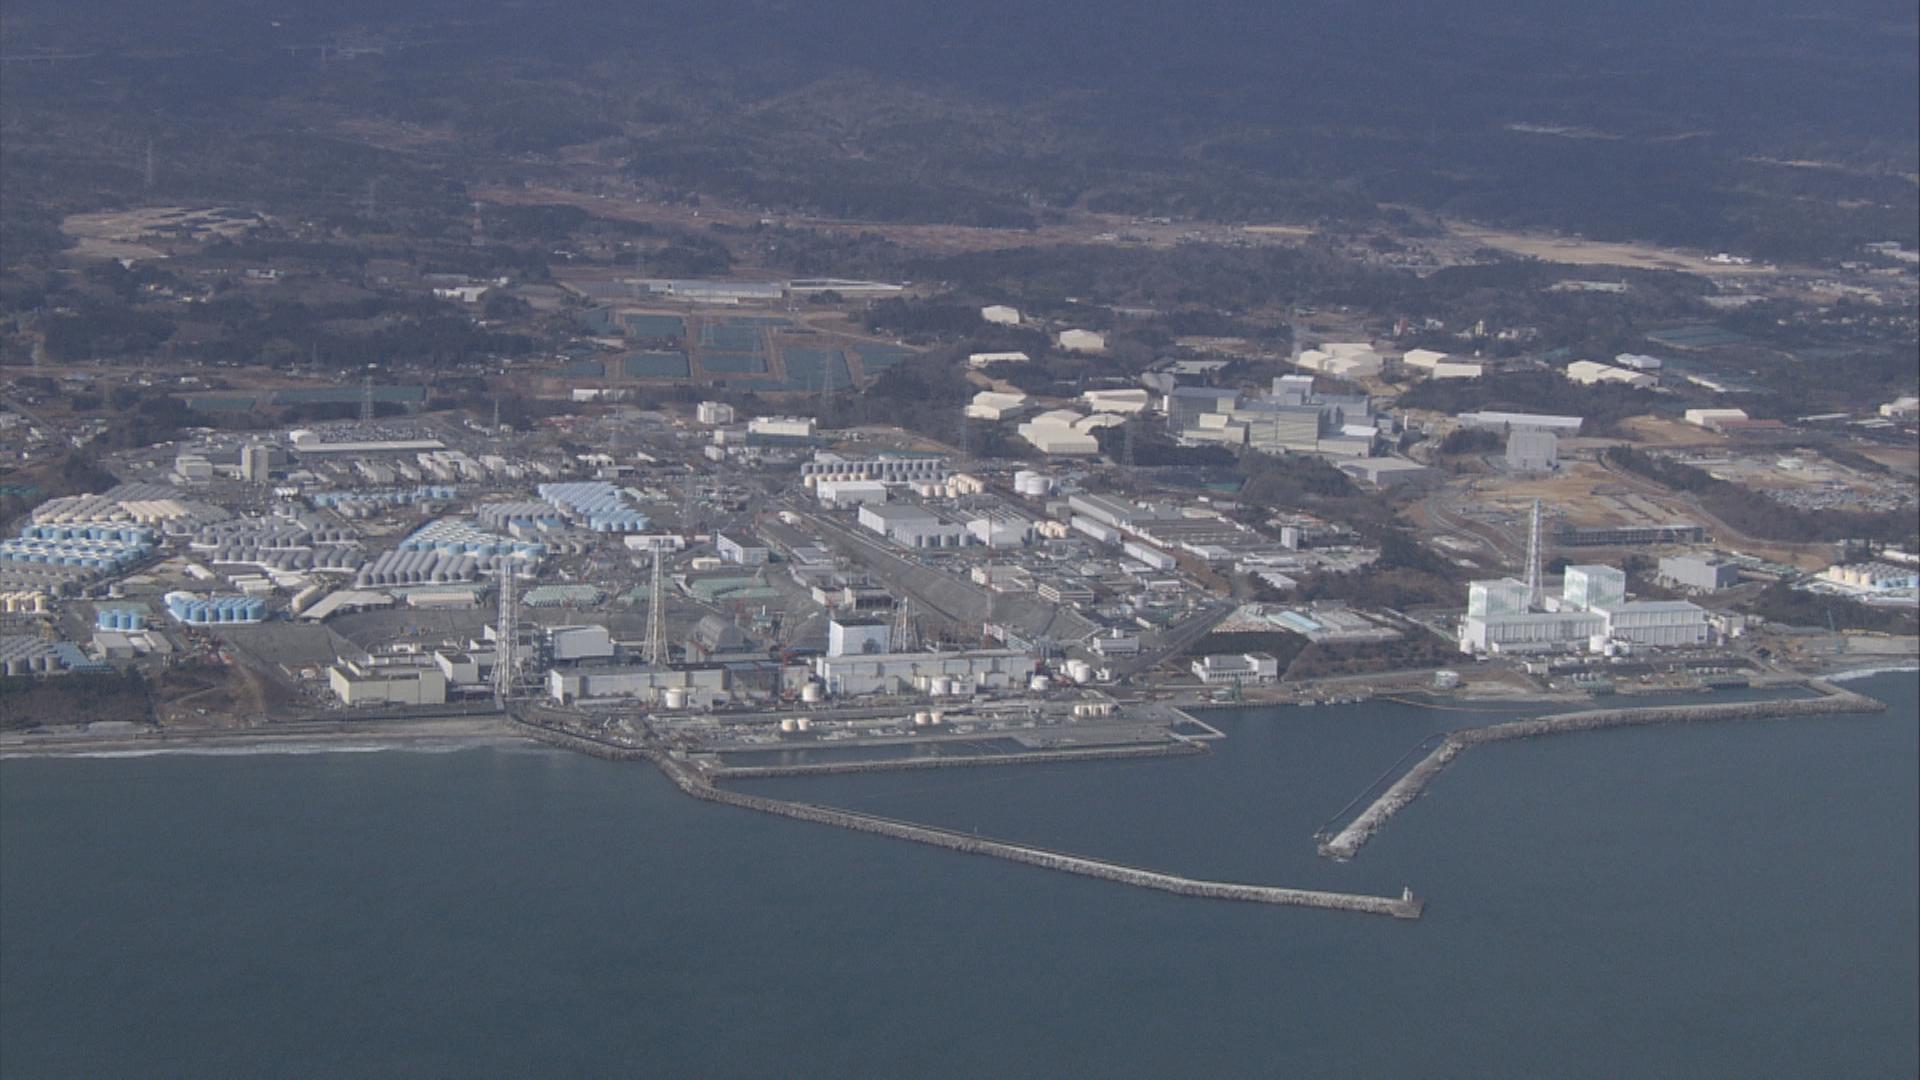 【速報】福島第一原発で停電が発生 処理水の放出が停止【福島県】